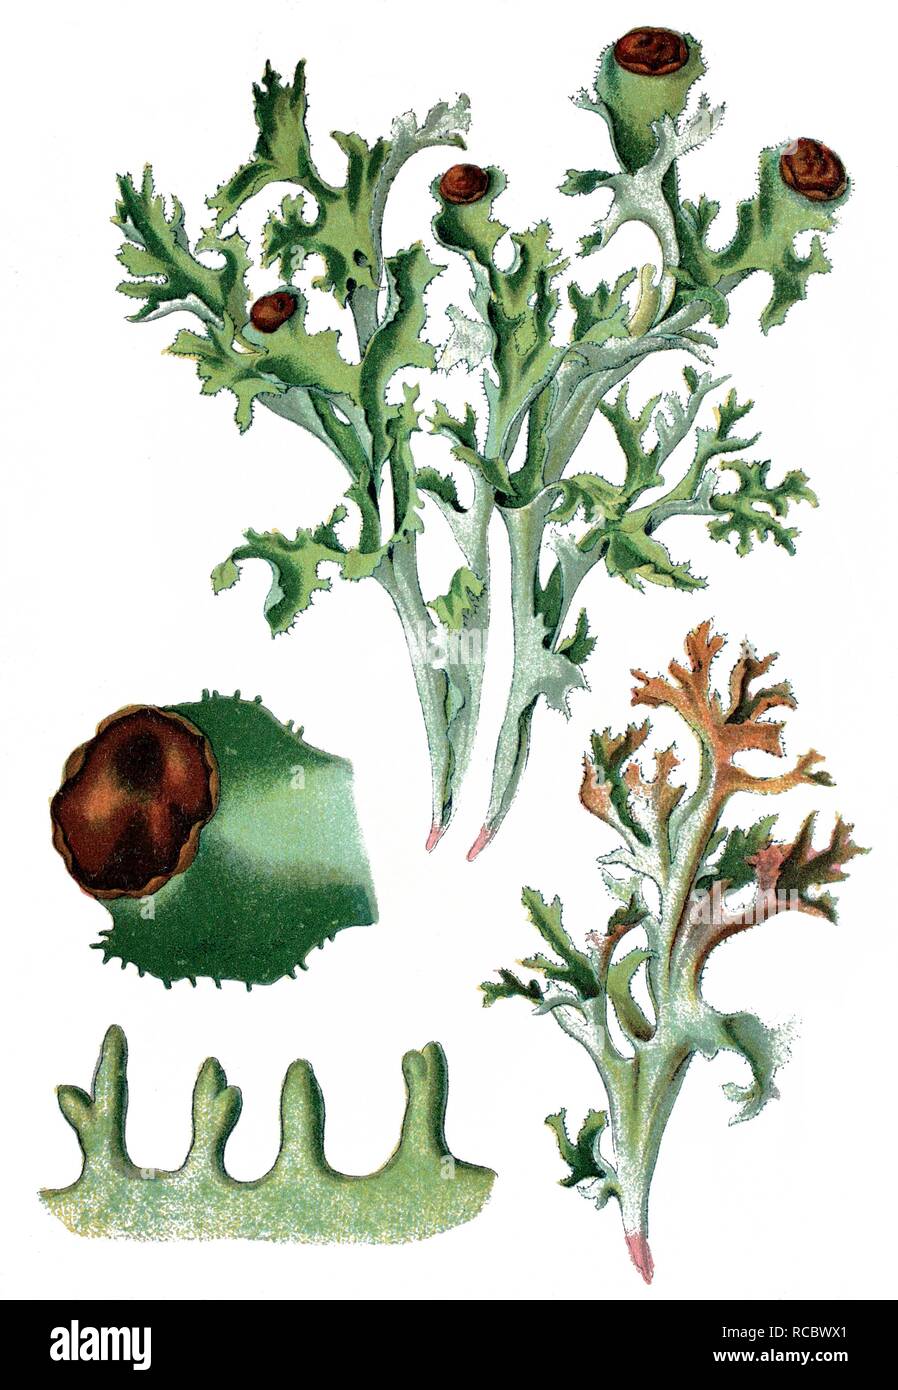 Iceland Moss (Cetraria islandica), a medicinal plant, historical chromolithography, ca. 1870 Stock Photo